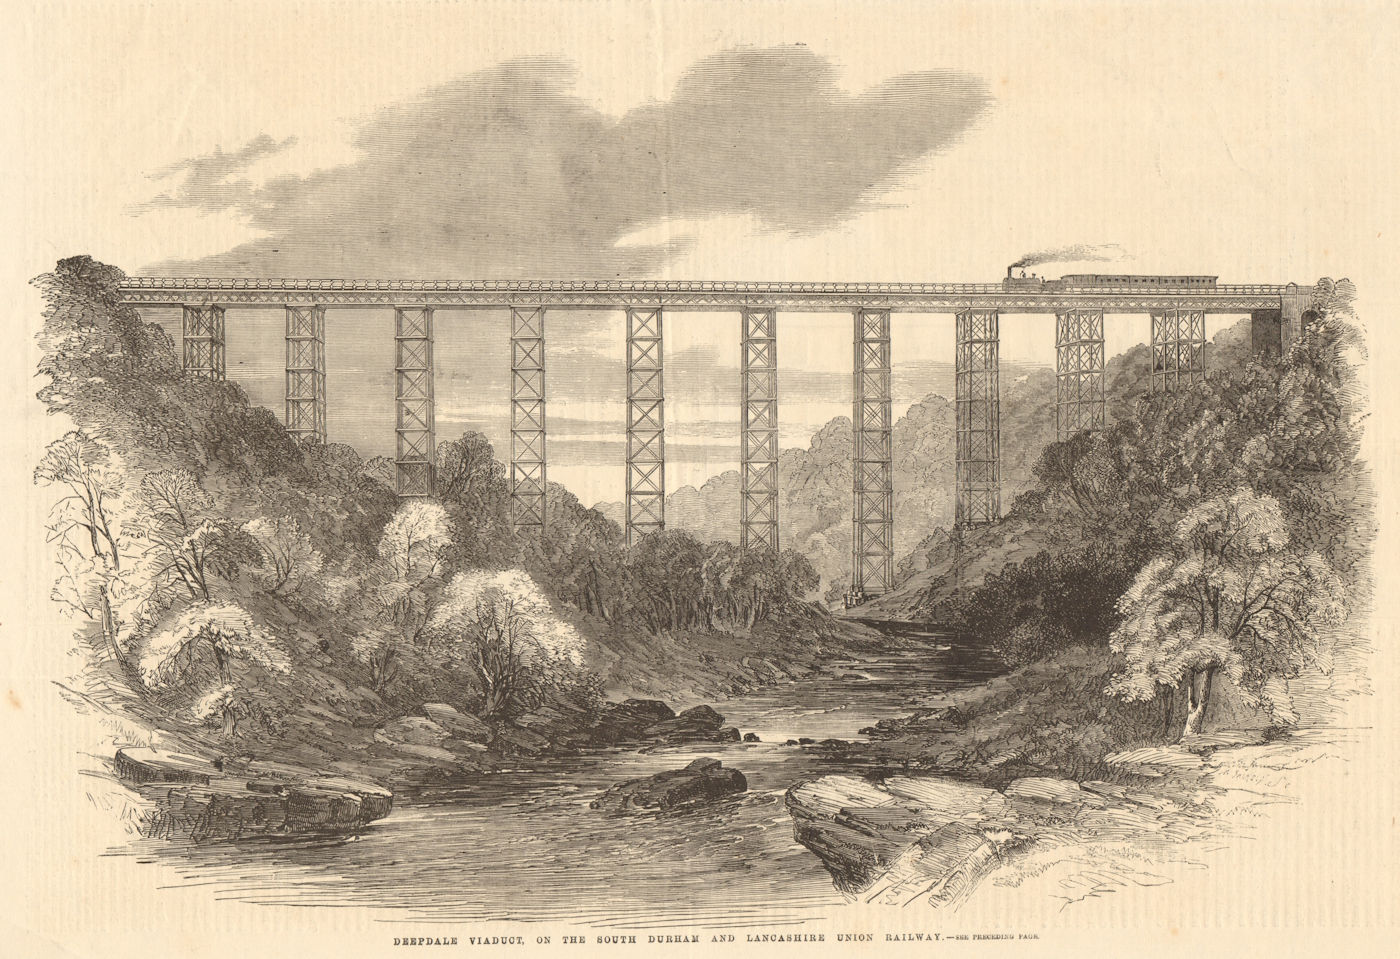 Associate Product Deepdale Viaduct, on the South Durham & Lancashire Union Railway. Preston 1859